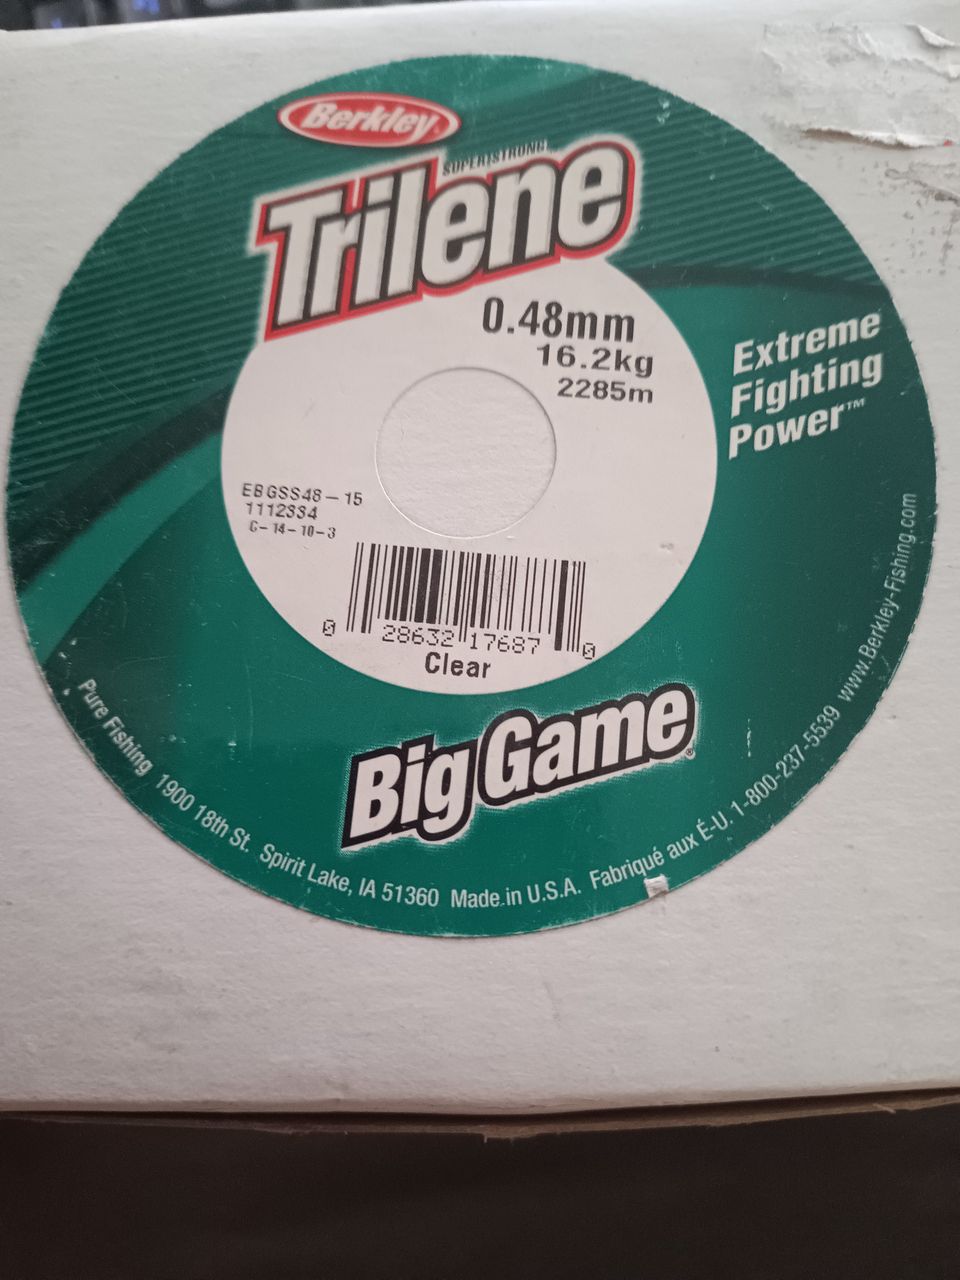 Berkley Trilene Big game 0,48mm 2285m